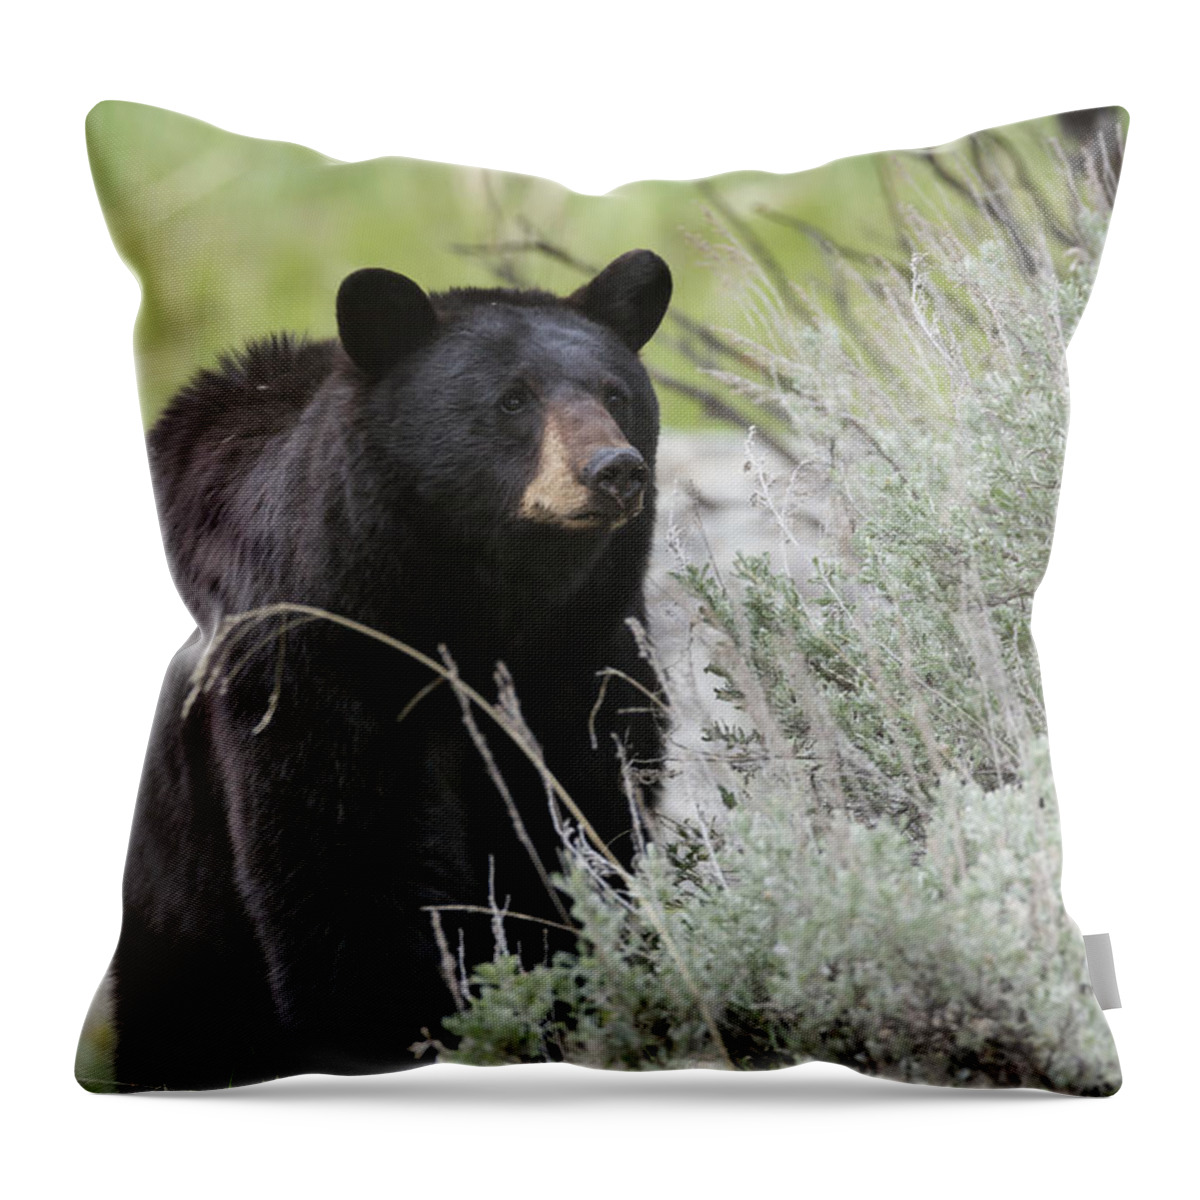 Ursus Throw Pillow featuring the photograph Black Bear Sow by David Watkins